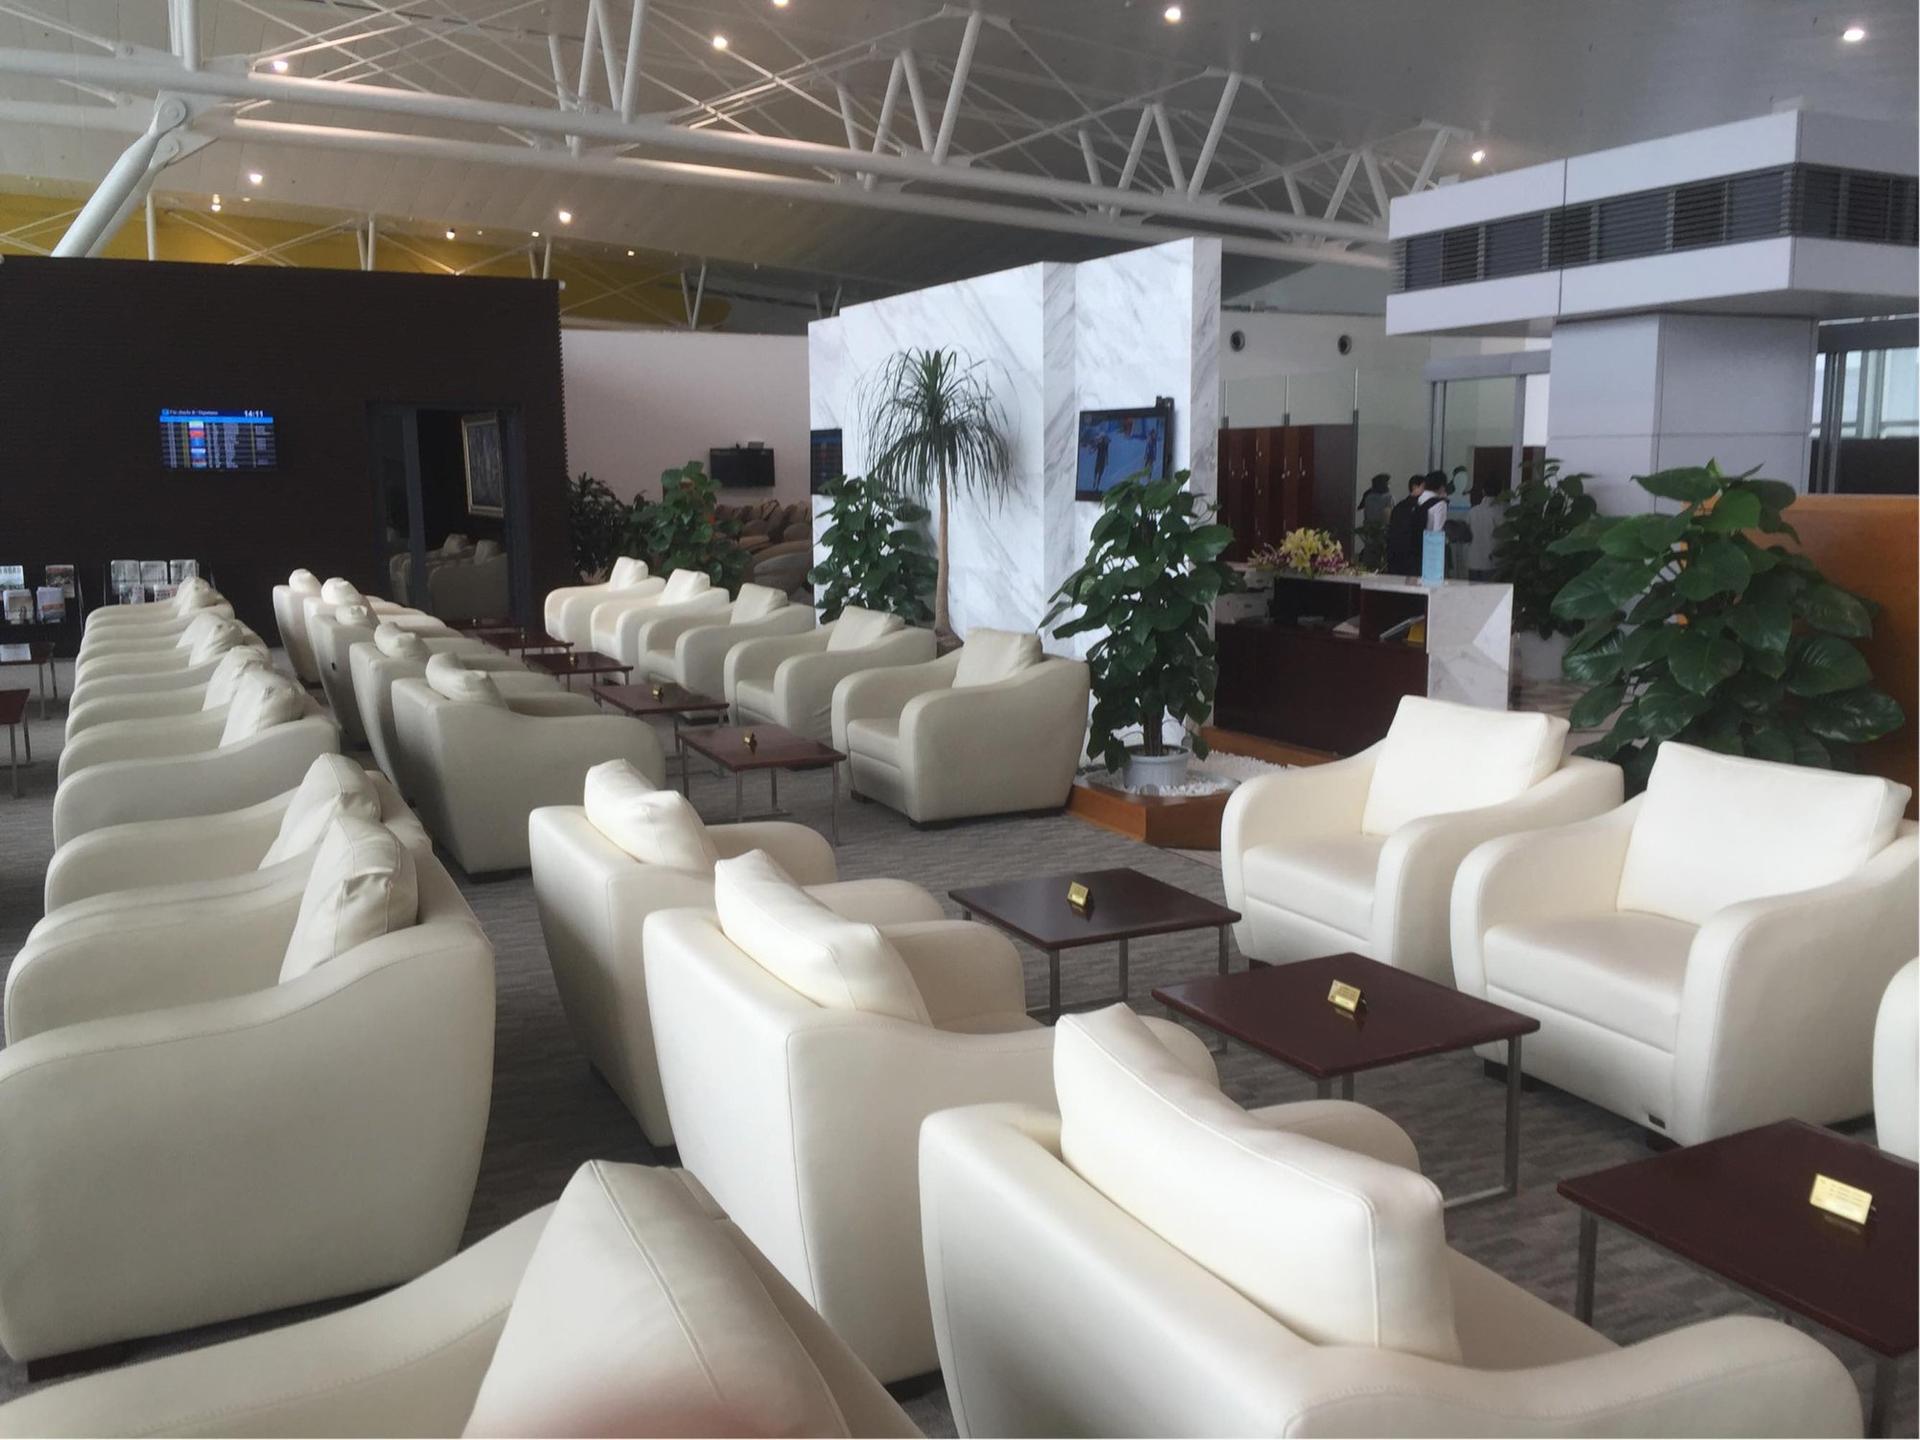 Noi Bai International Airport Business Lounge image 3 of 26